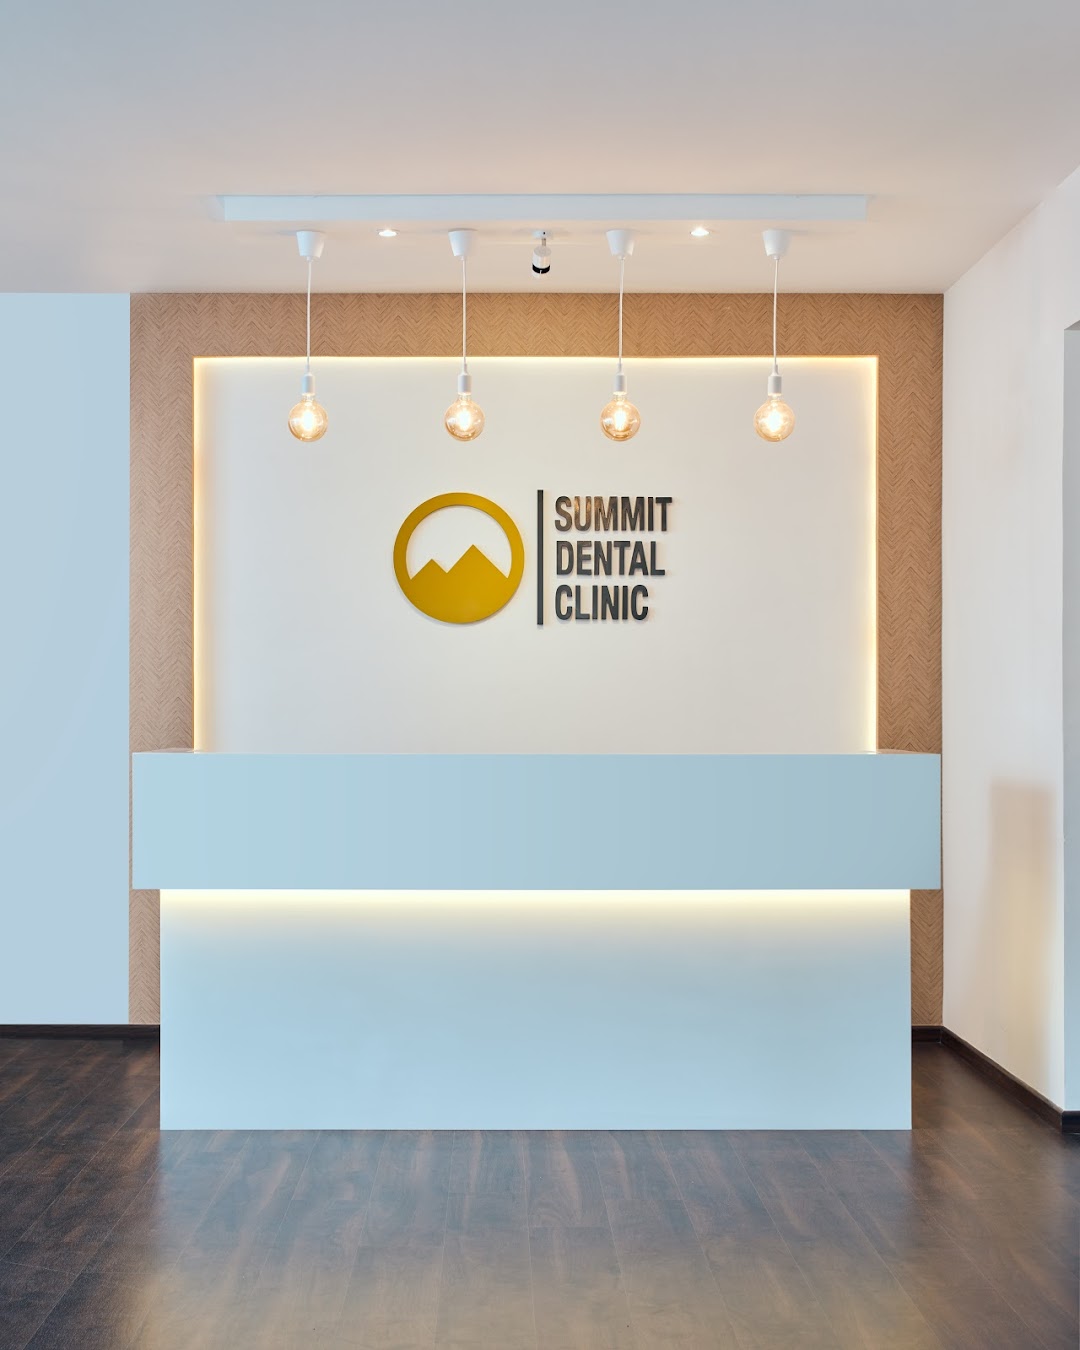 Summit Dental Clinic